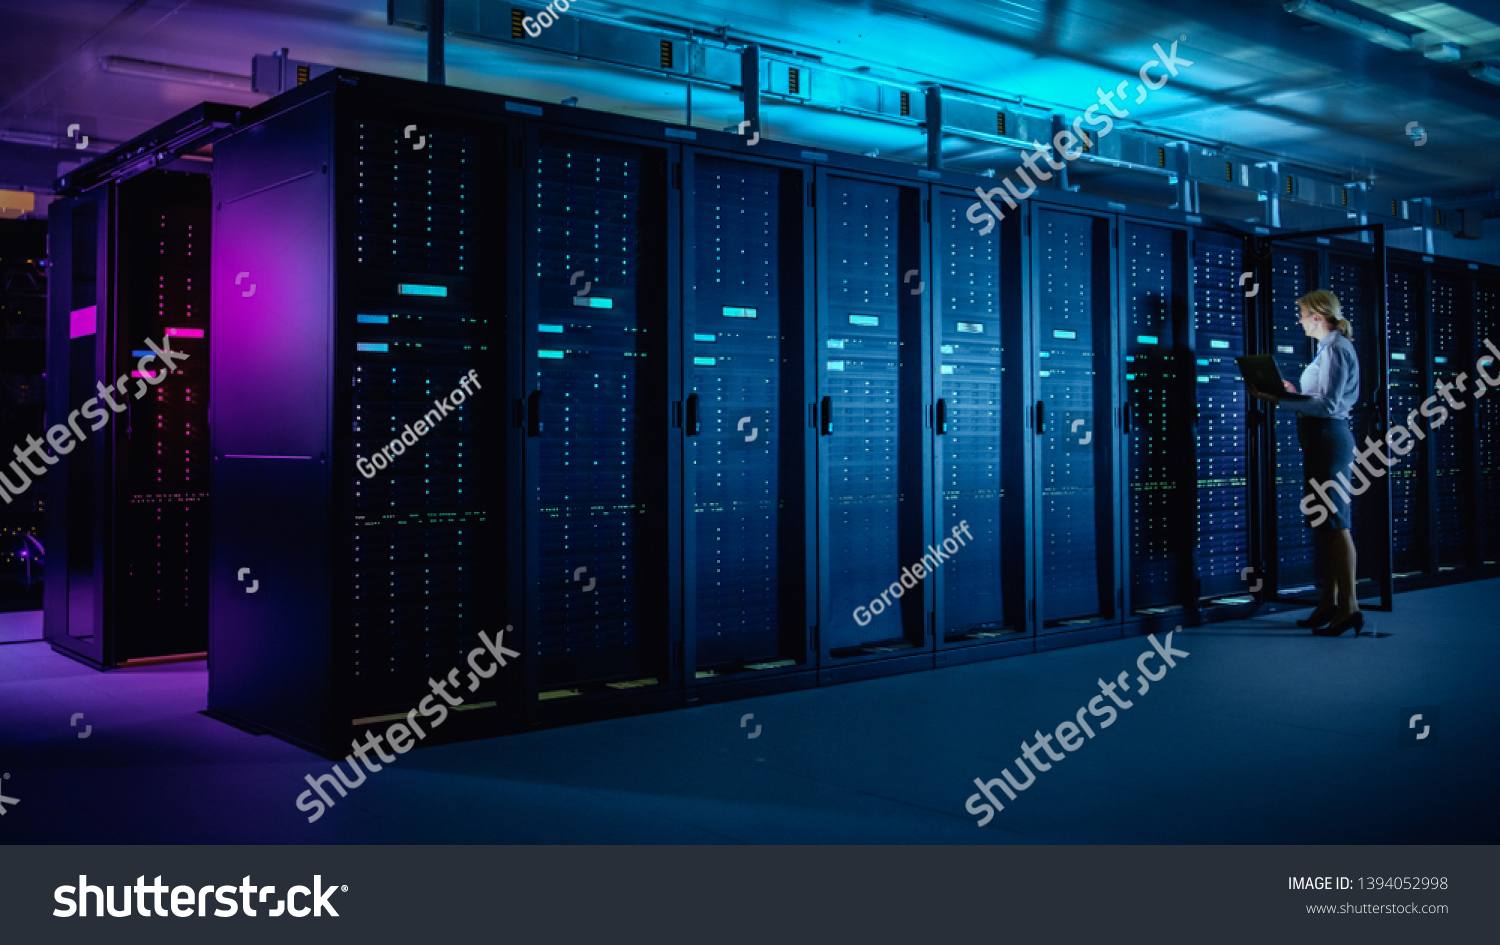 In Data Center: IT Technician Running Maintenance Programme on Laptop, Controls Operational Server Rack Optimal Functioning. Modern High-Tech Telecommunications Operational Data Center in Neon Lights. #1394052998